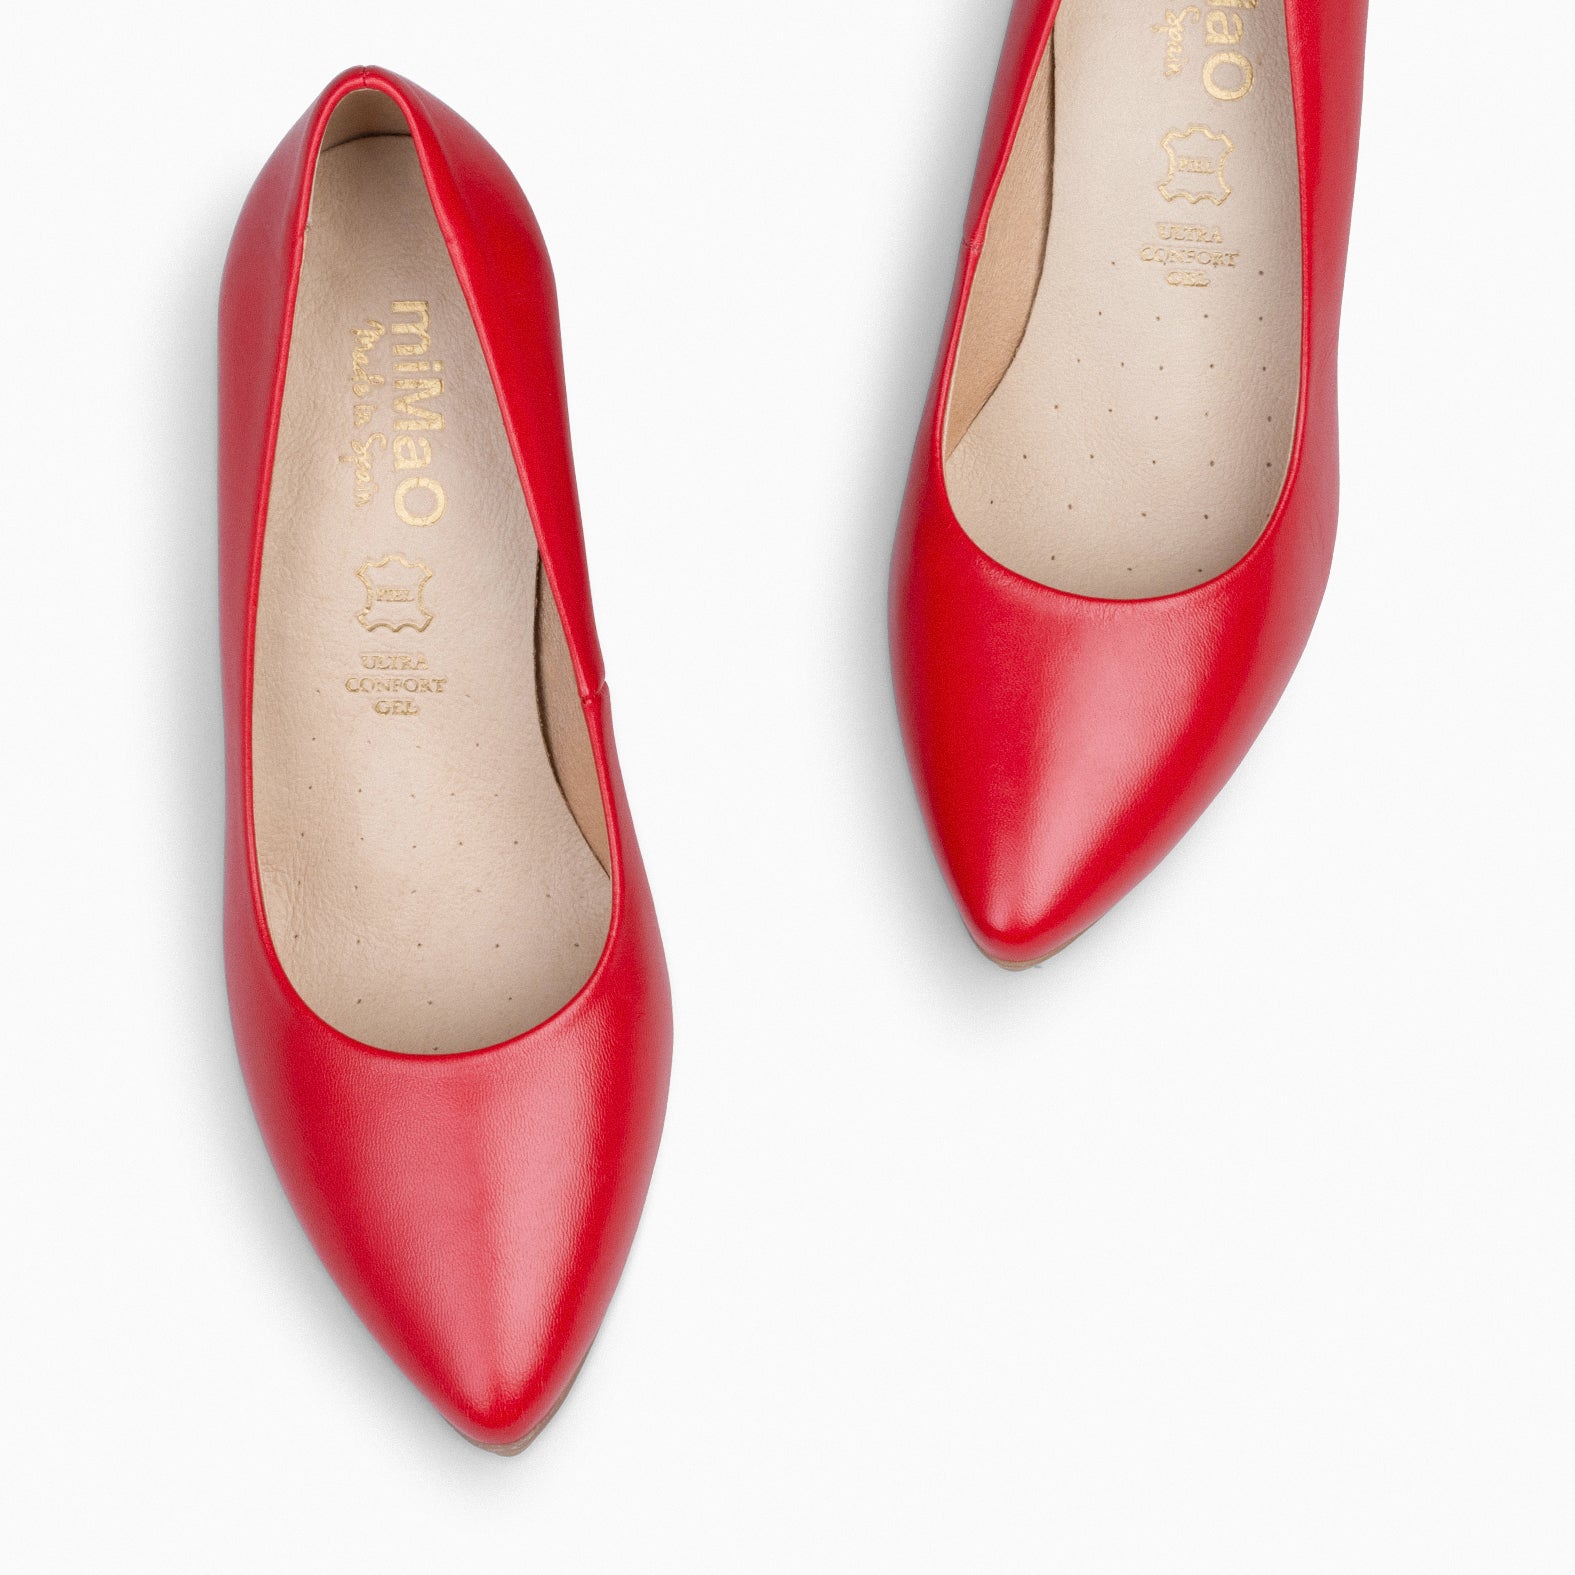 URBAN SALON –  RED nappa leather high heel